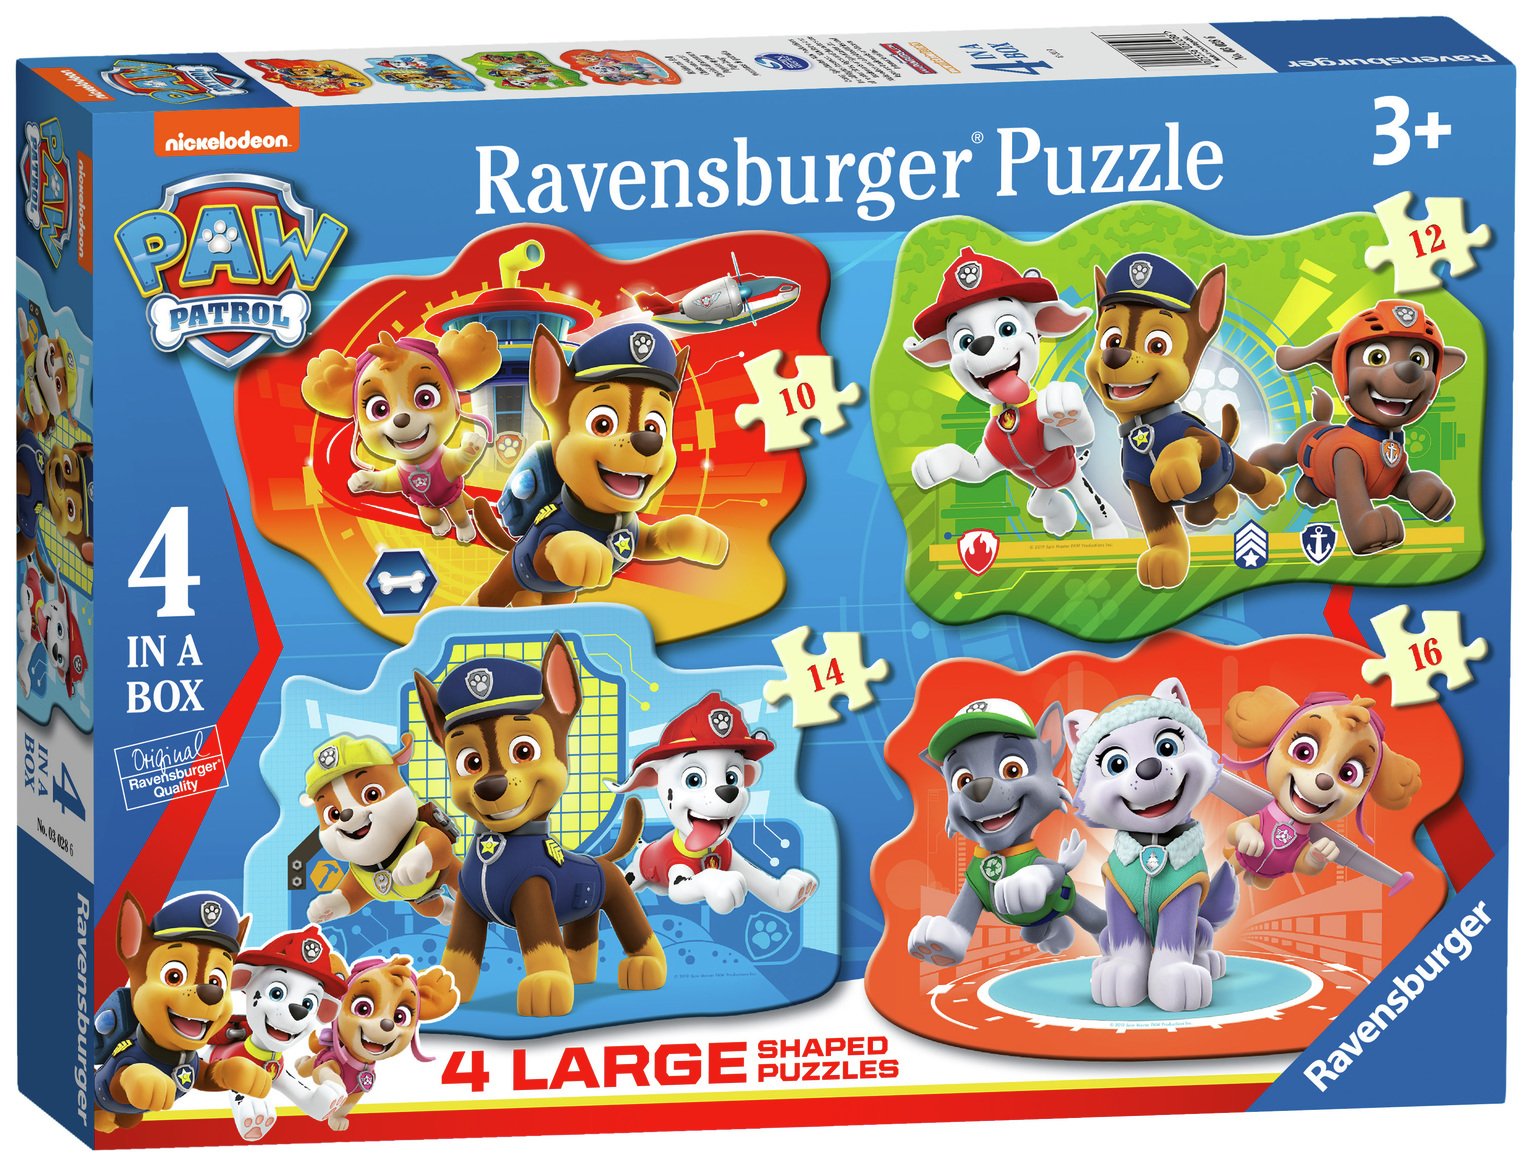 Ravensburger PAW Patrol Floor 4 Shaped Jigsaw Puzzles